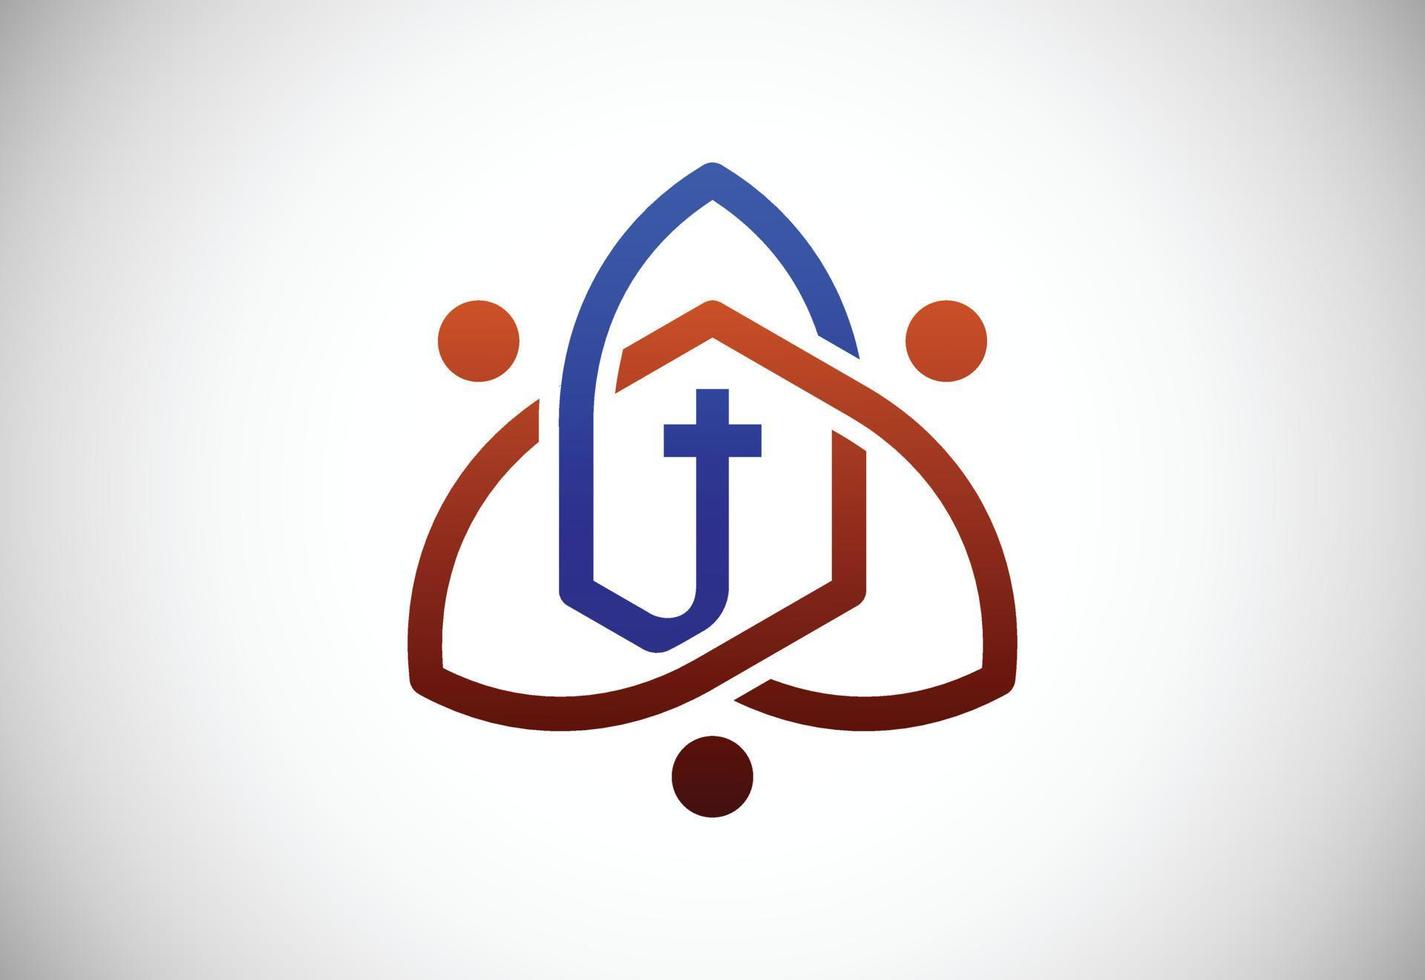 Church logo. Christian sign symbols. The Cross of Jesus vector